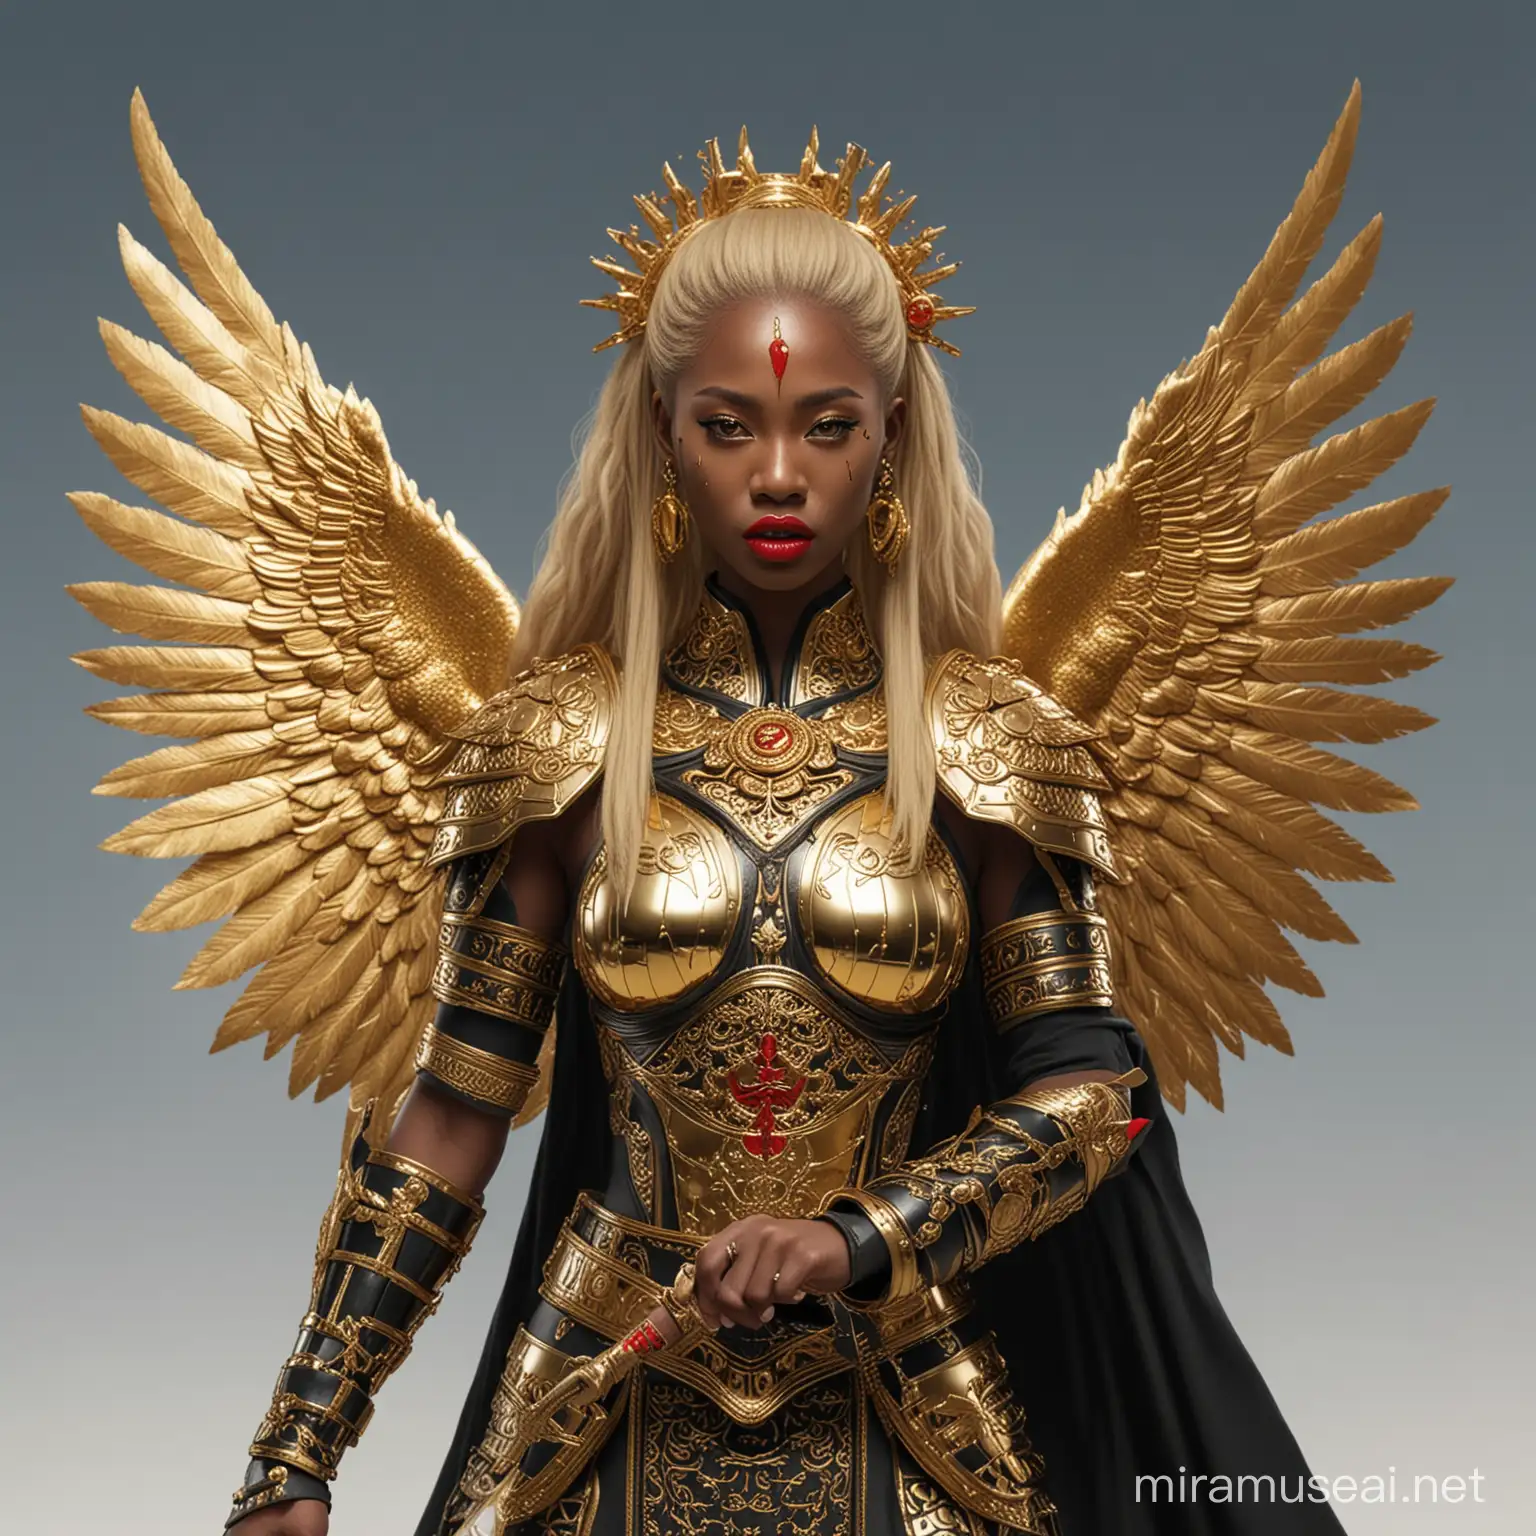 Golden Samurai Goddess African Model in Ornate Japanese Armor with Gold Sword and Wings